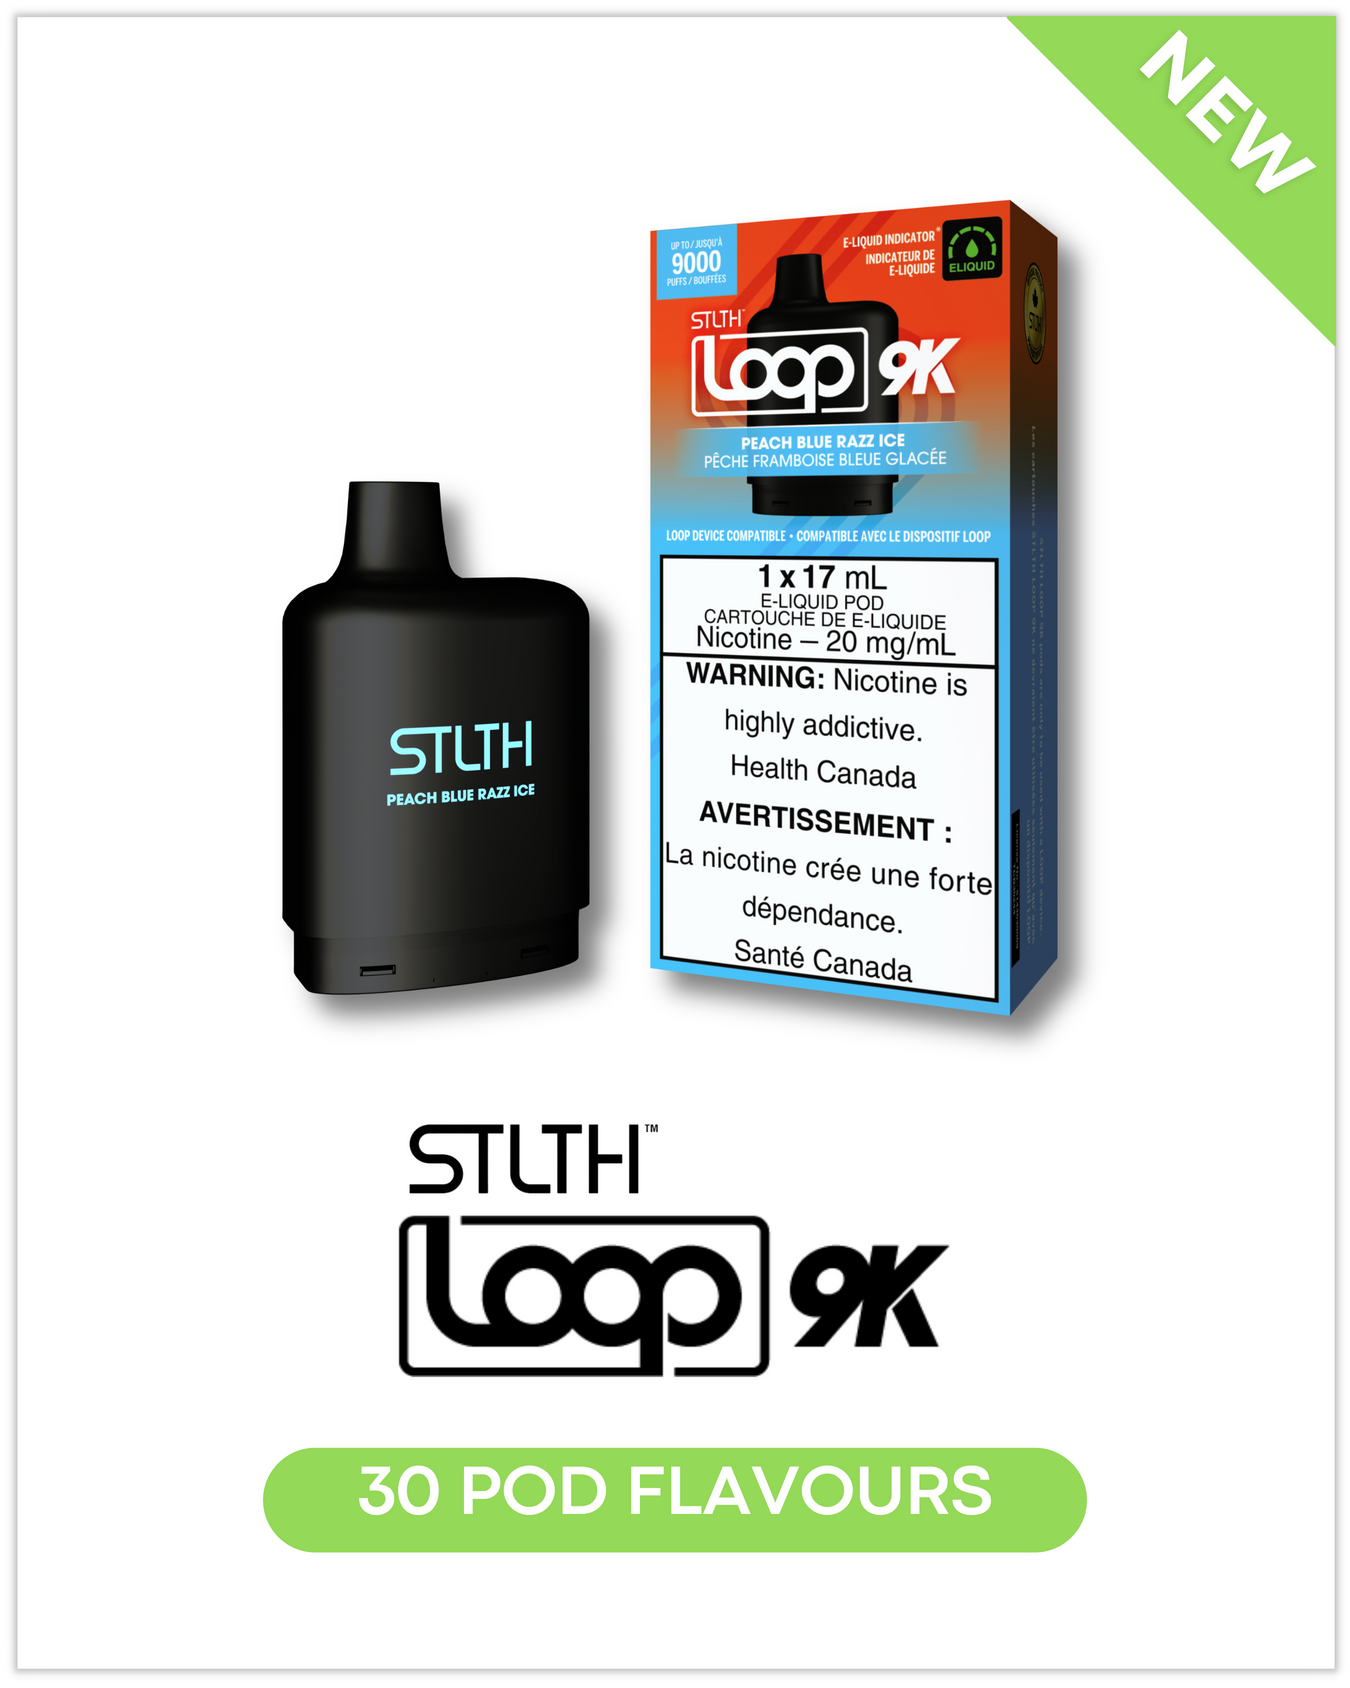 STLTH Loop 9K Pod